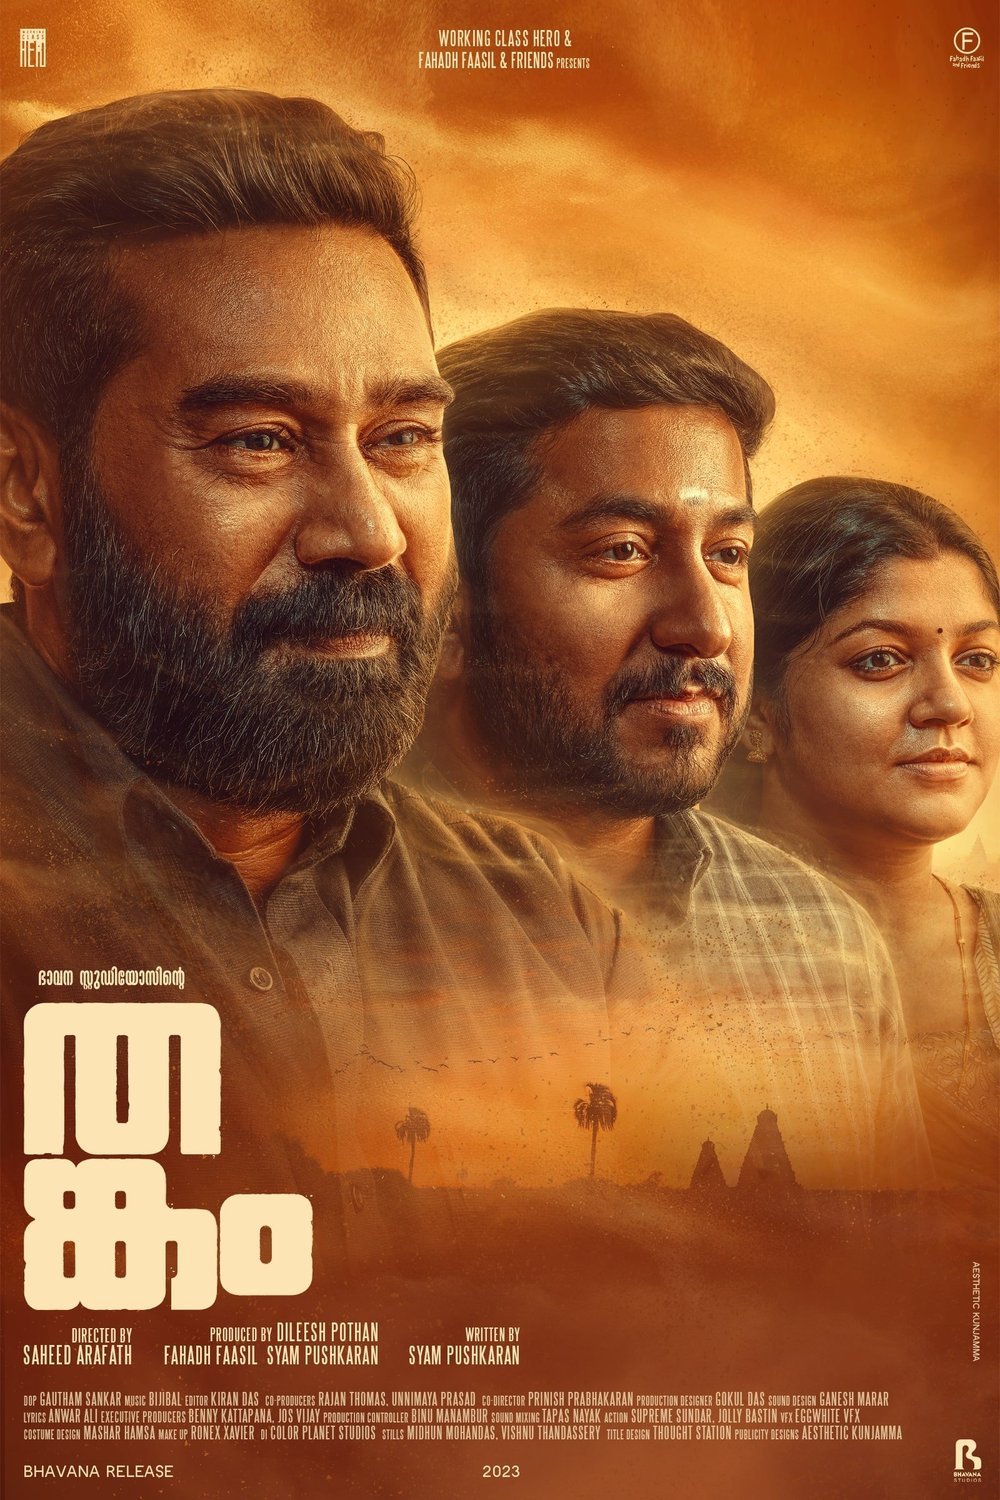 Malayalam poster of the movie Thangam